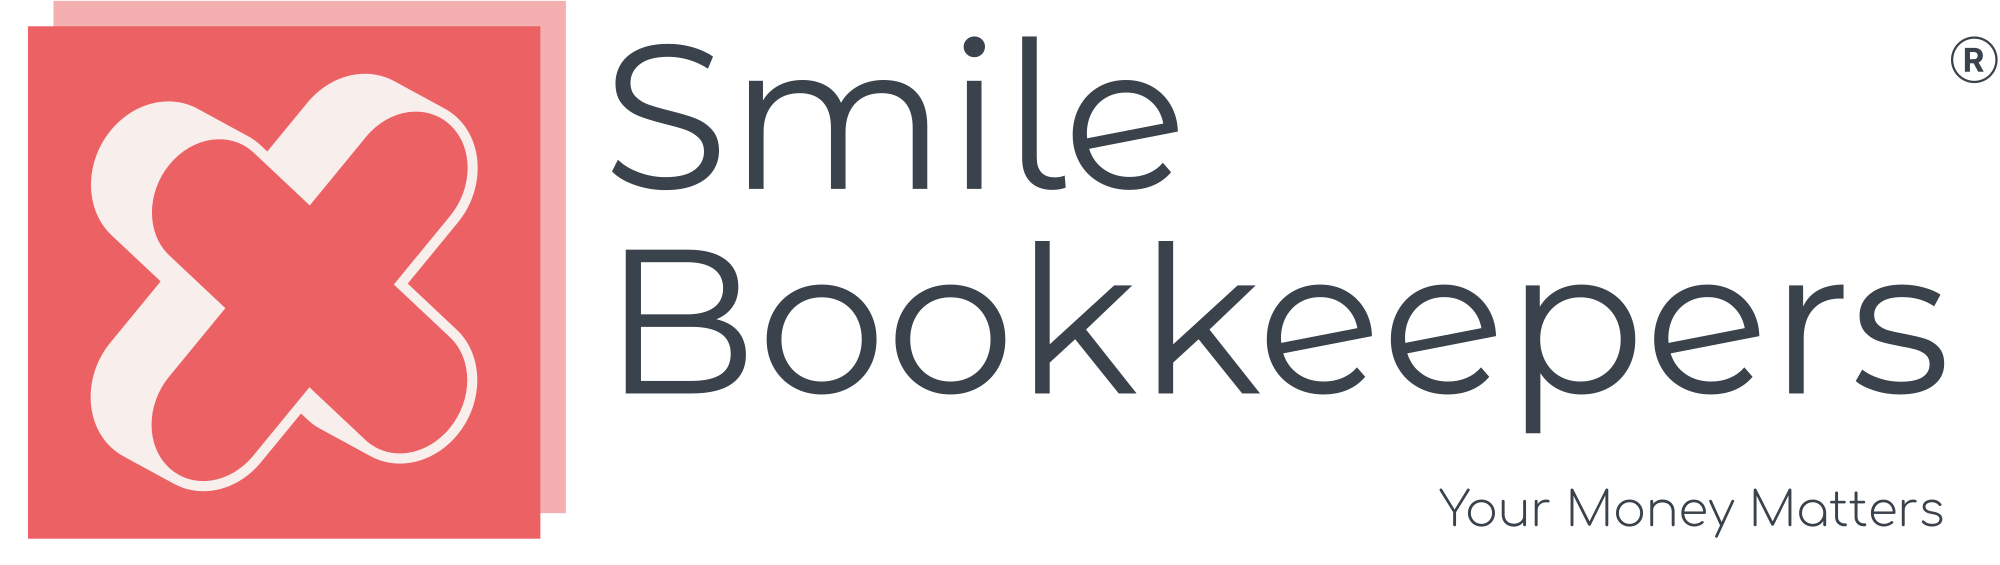 Smile bookkeepers high resolution logo color on transparent background